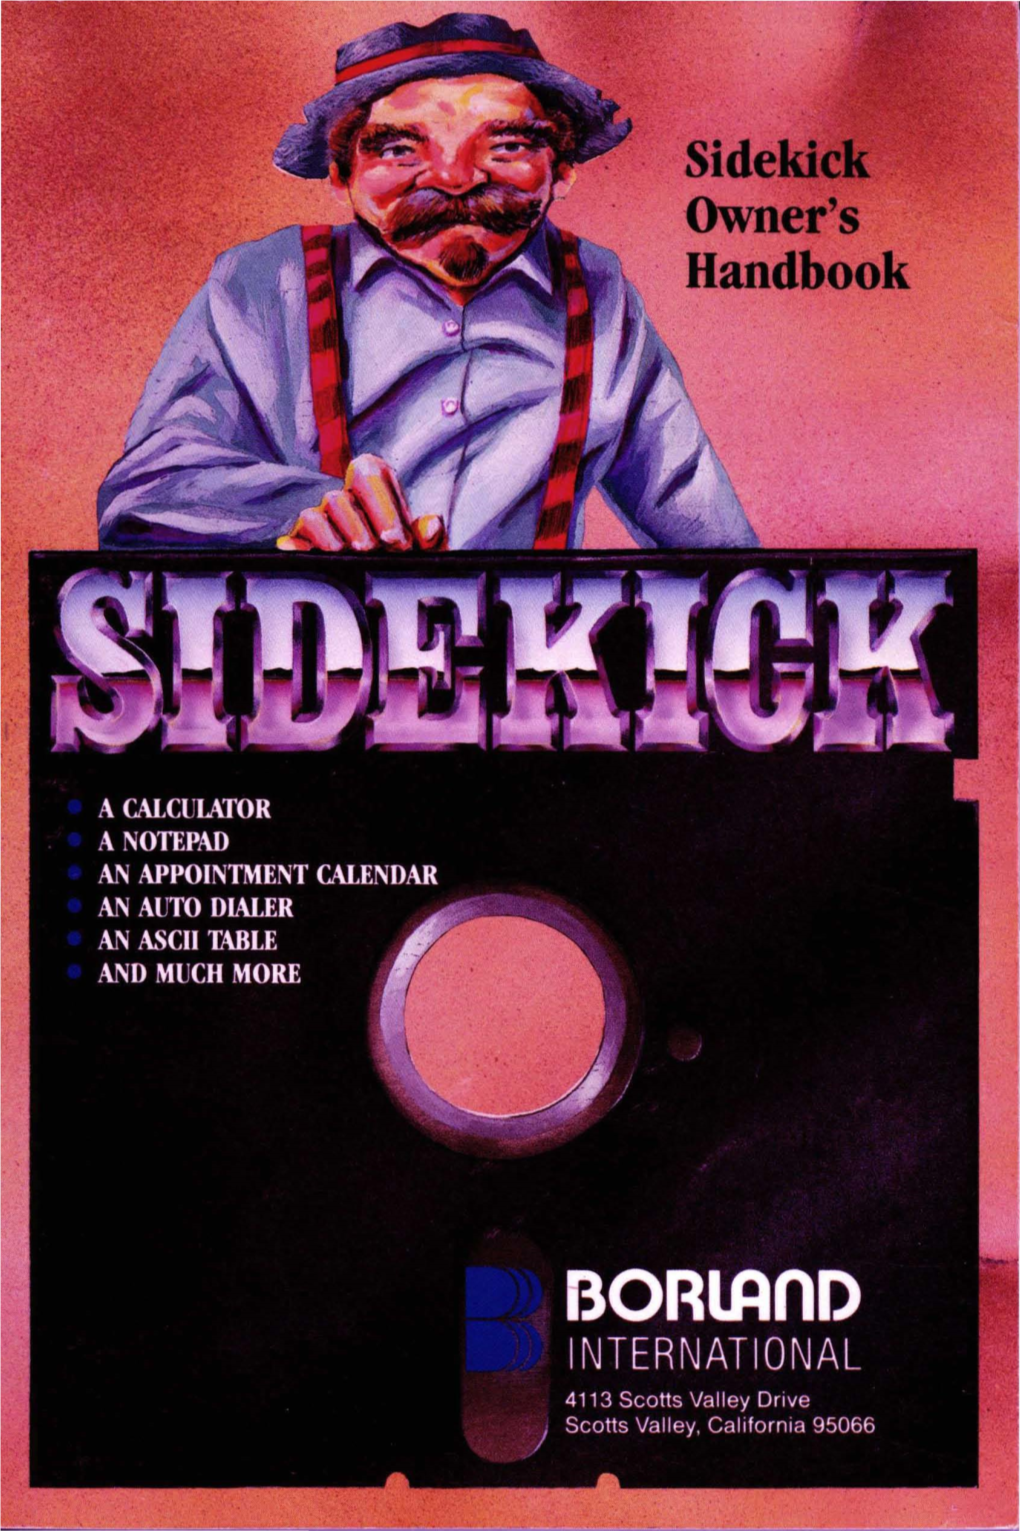 Owner's Handbook SIDEKICK Version 1